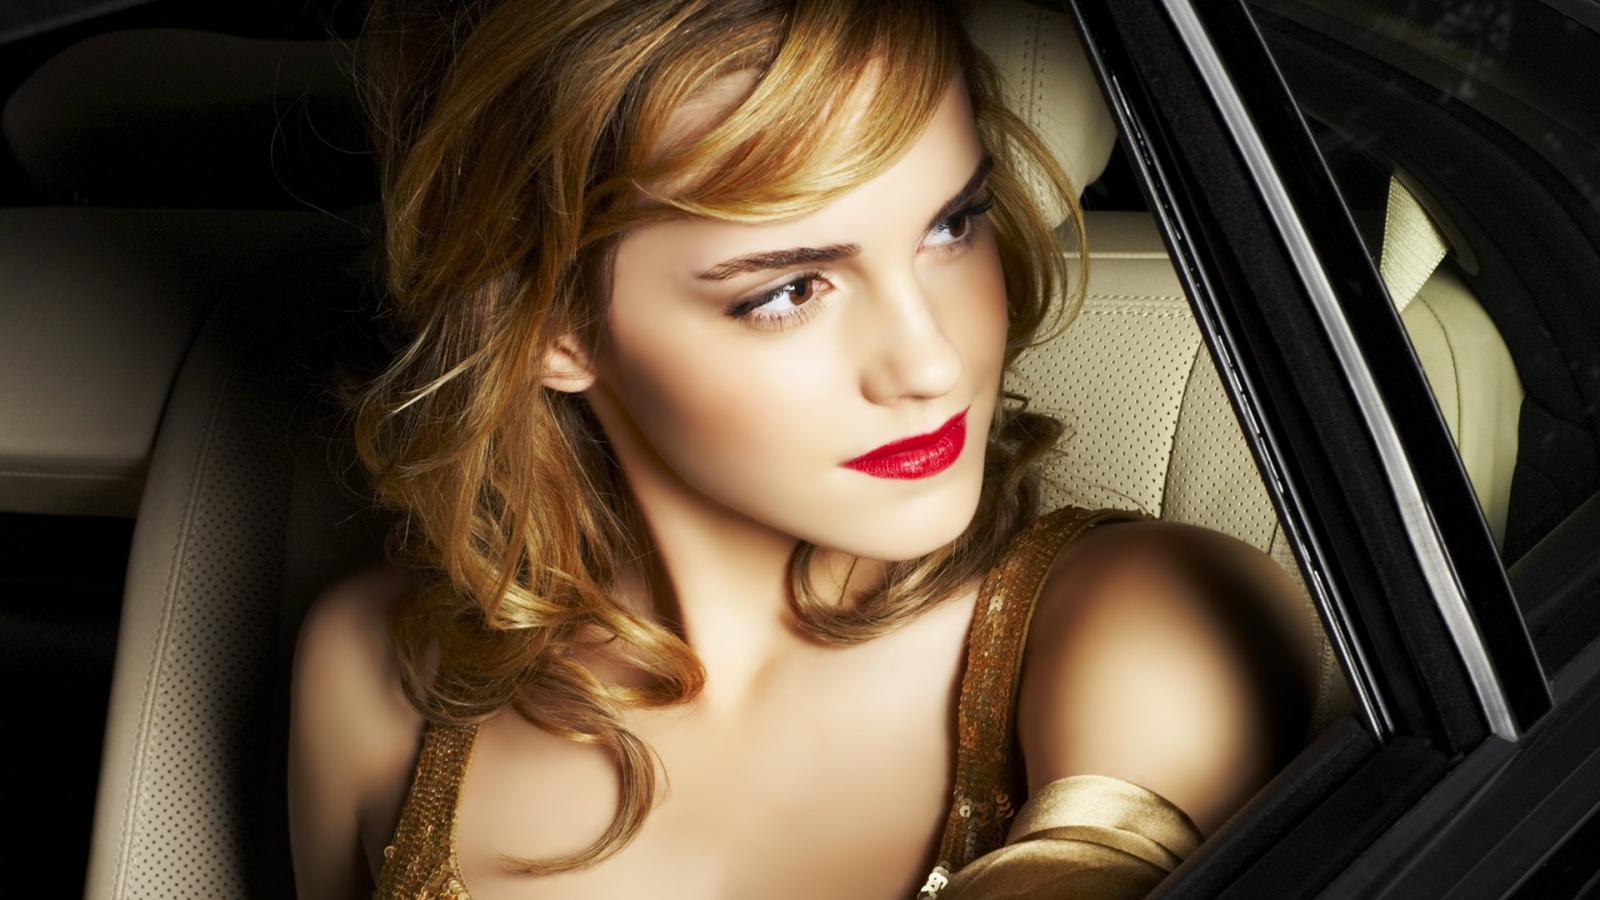 Emma Watson for 1600 x 900 HDTV resolution